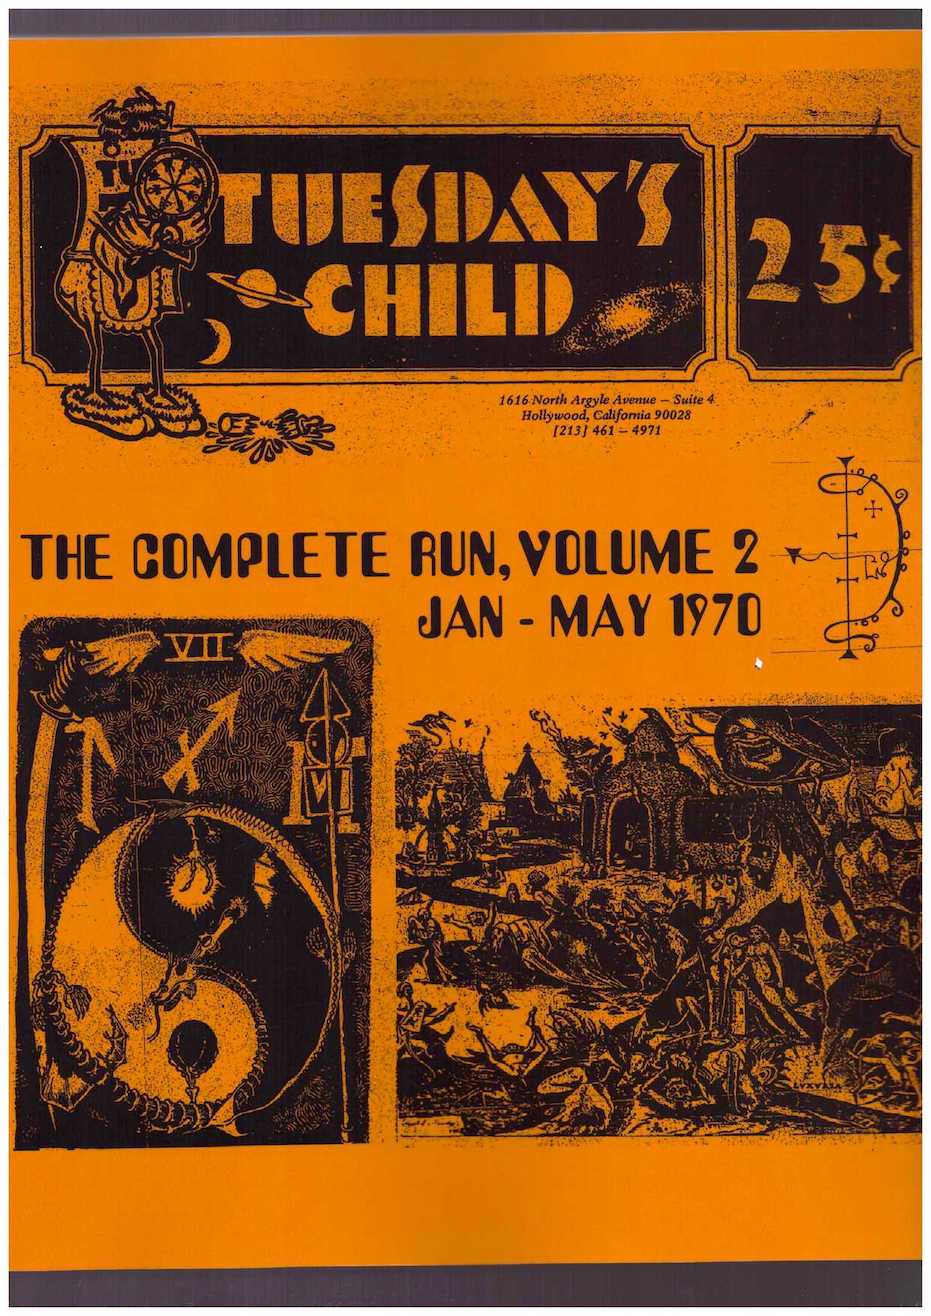 MINESTRONE, Octavio (ed.) - Tuesday’s Child – Vol. 2, 1970